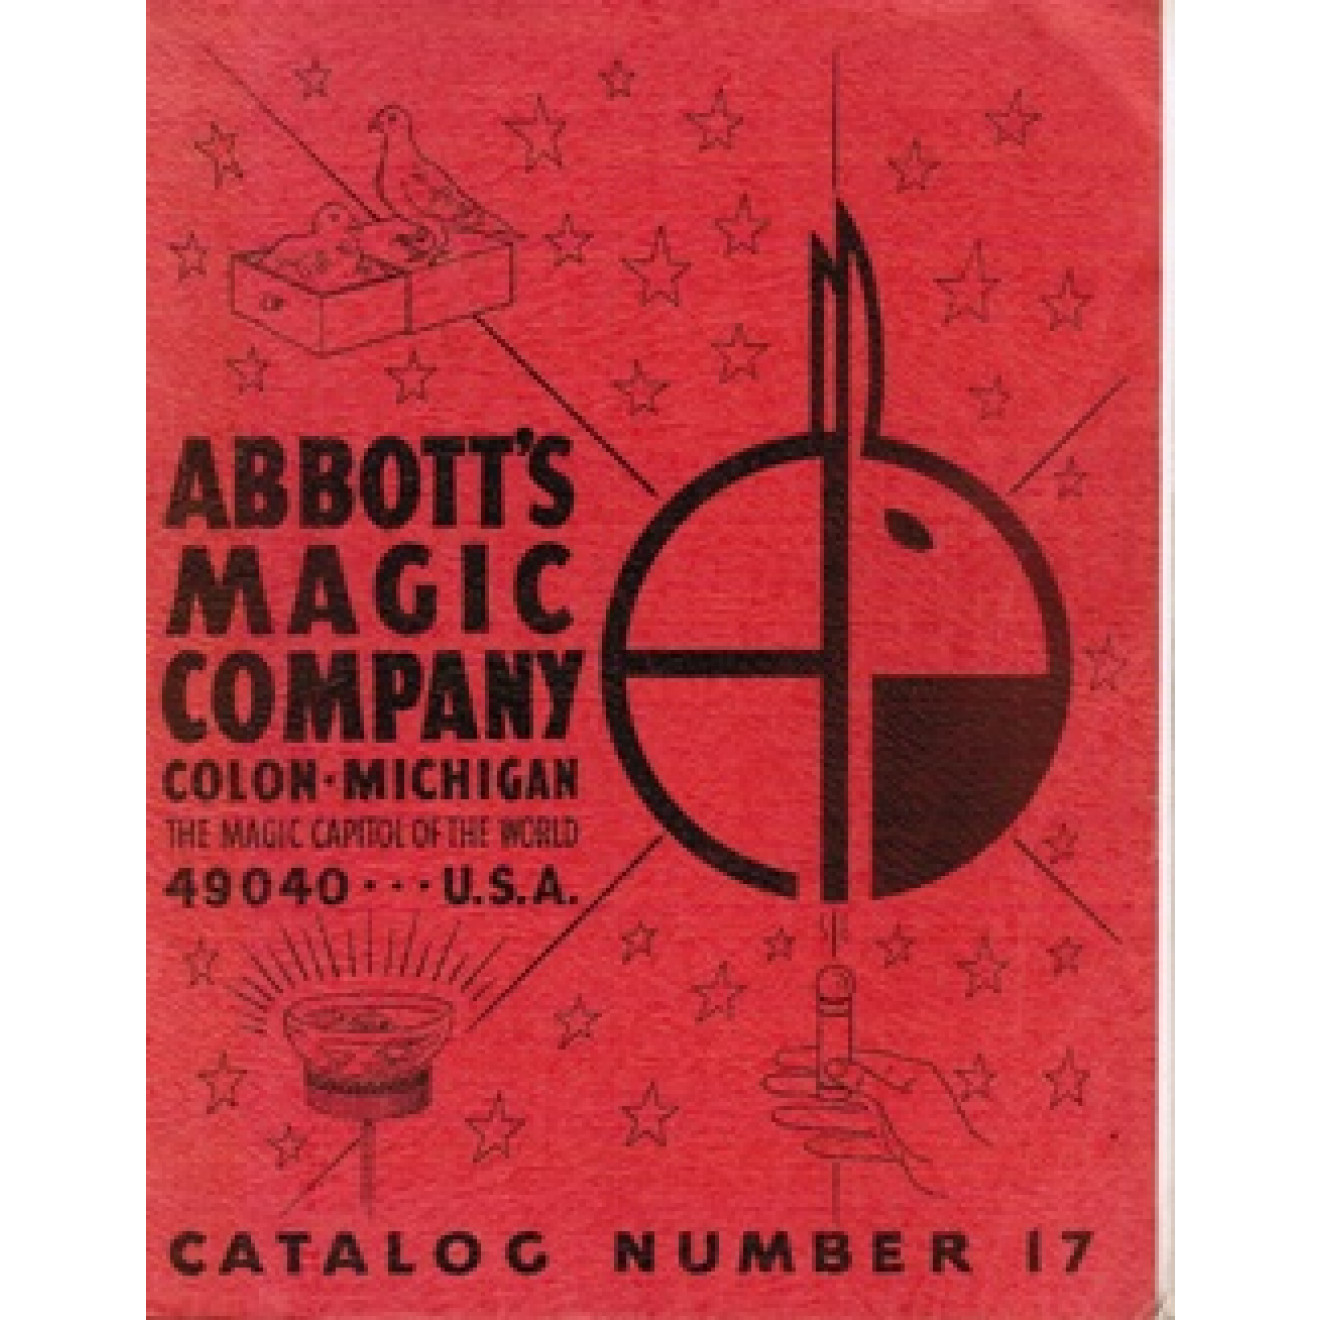 Abbotts' Magic Company catalog number 17